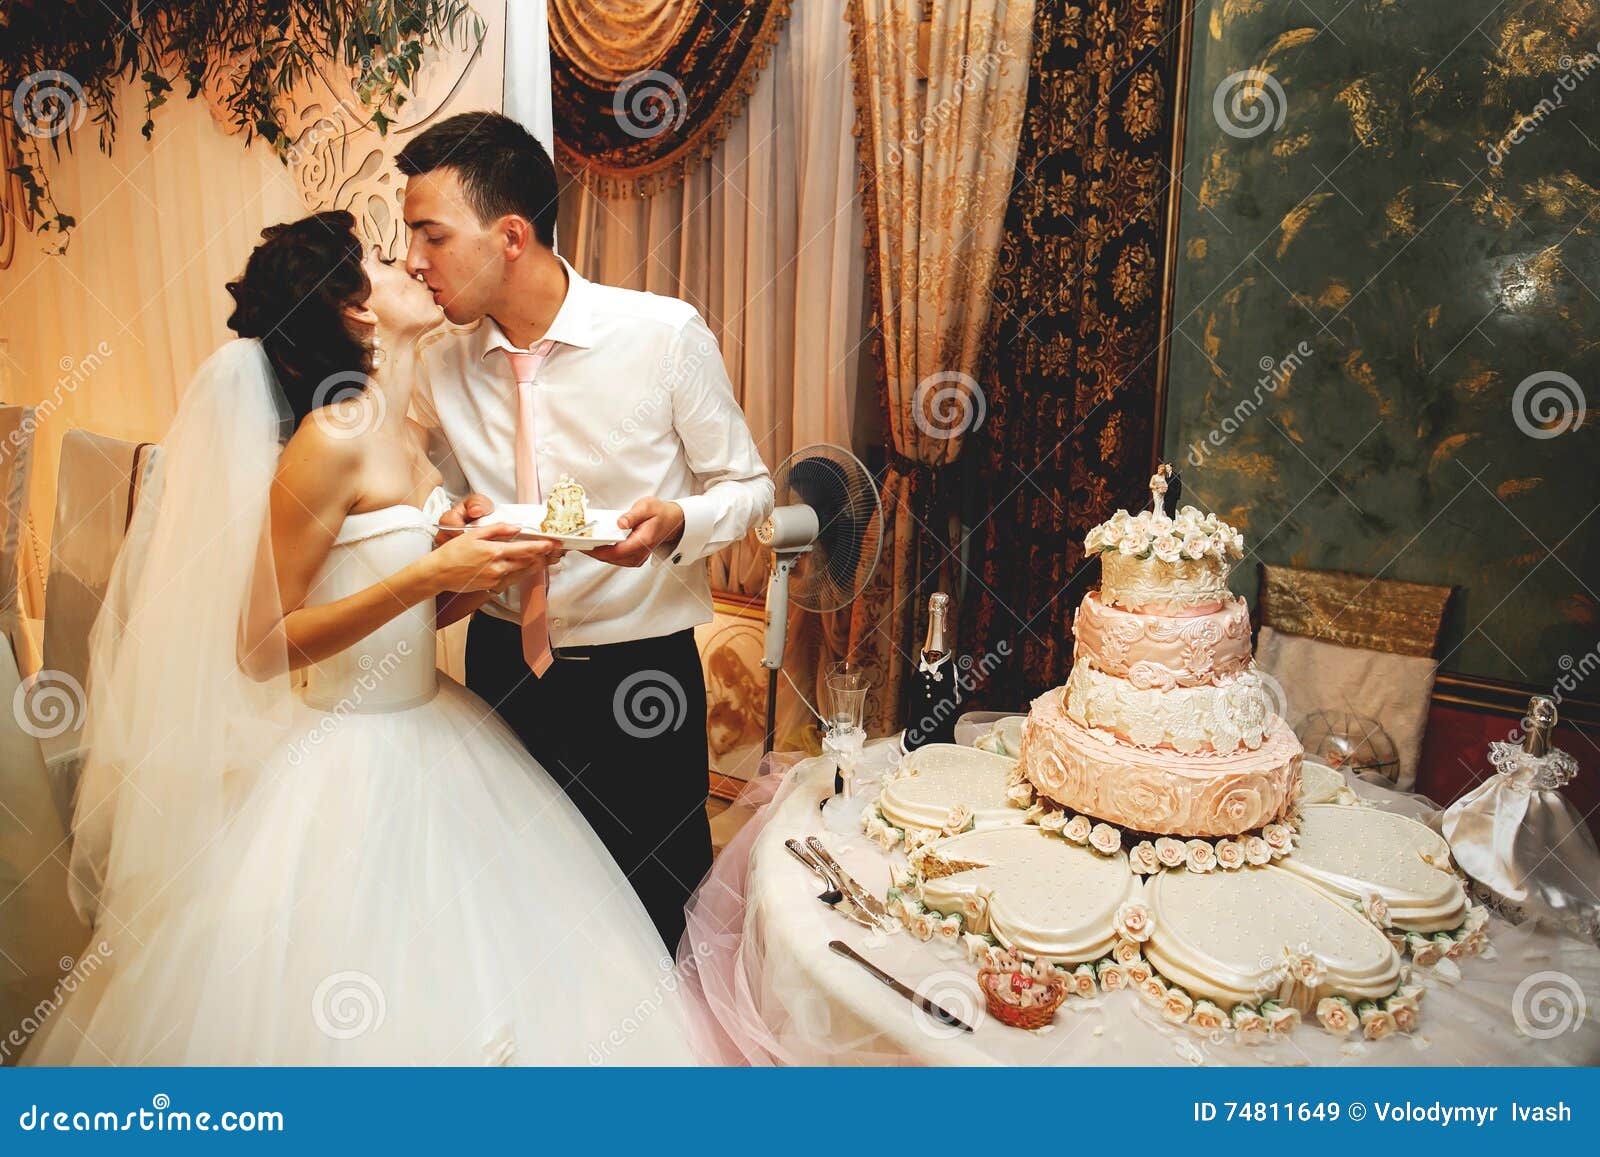 couple in love kissing near wedding cake